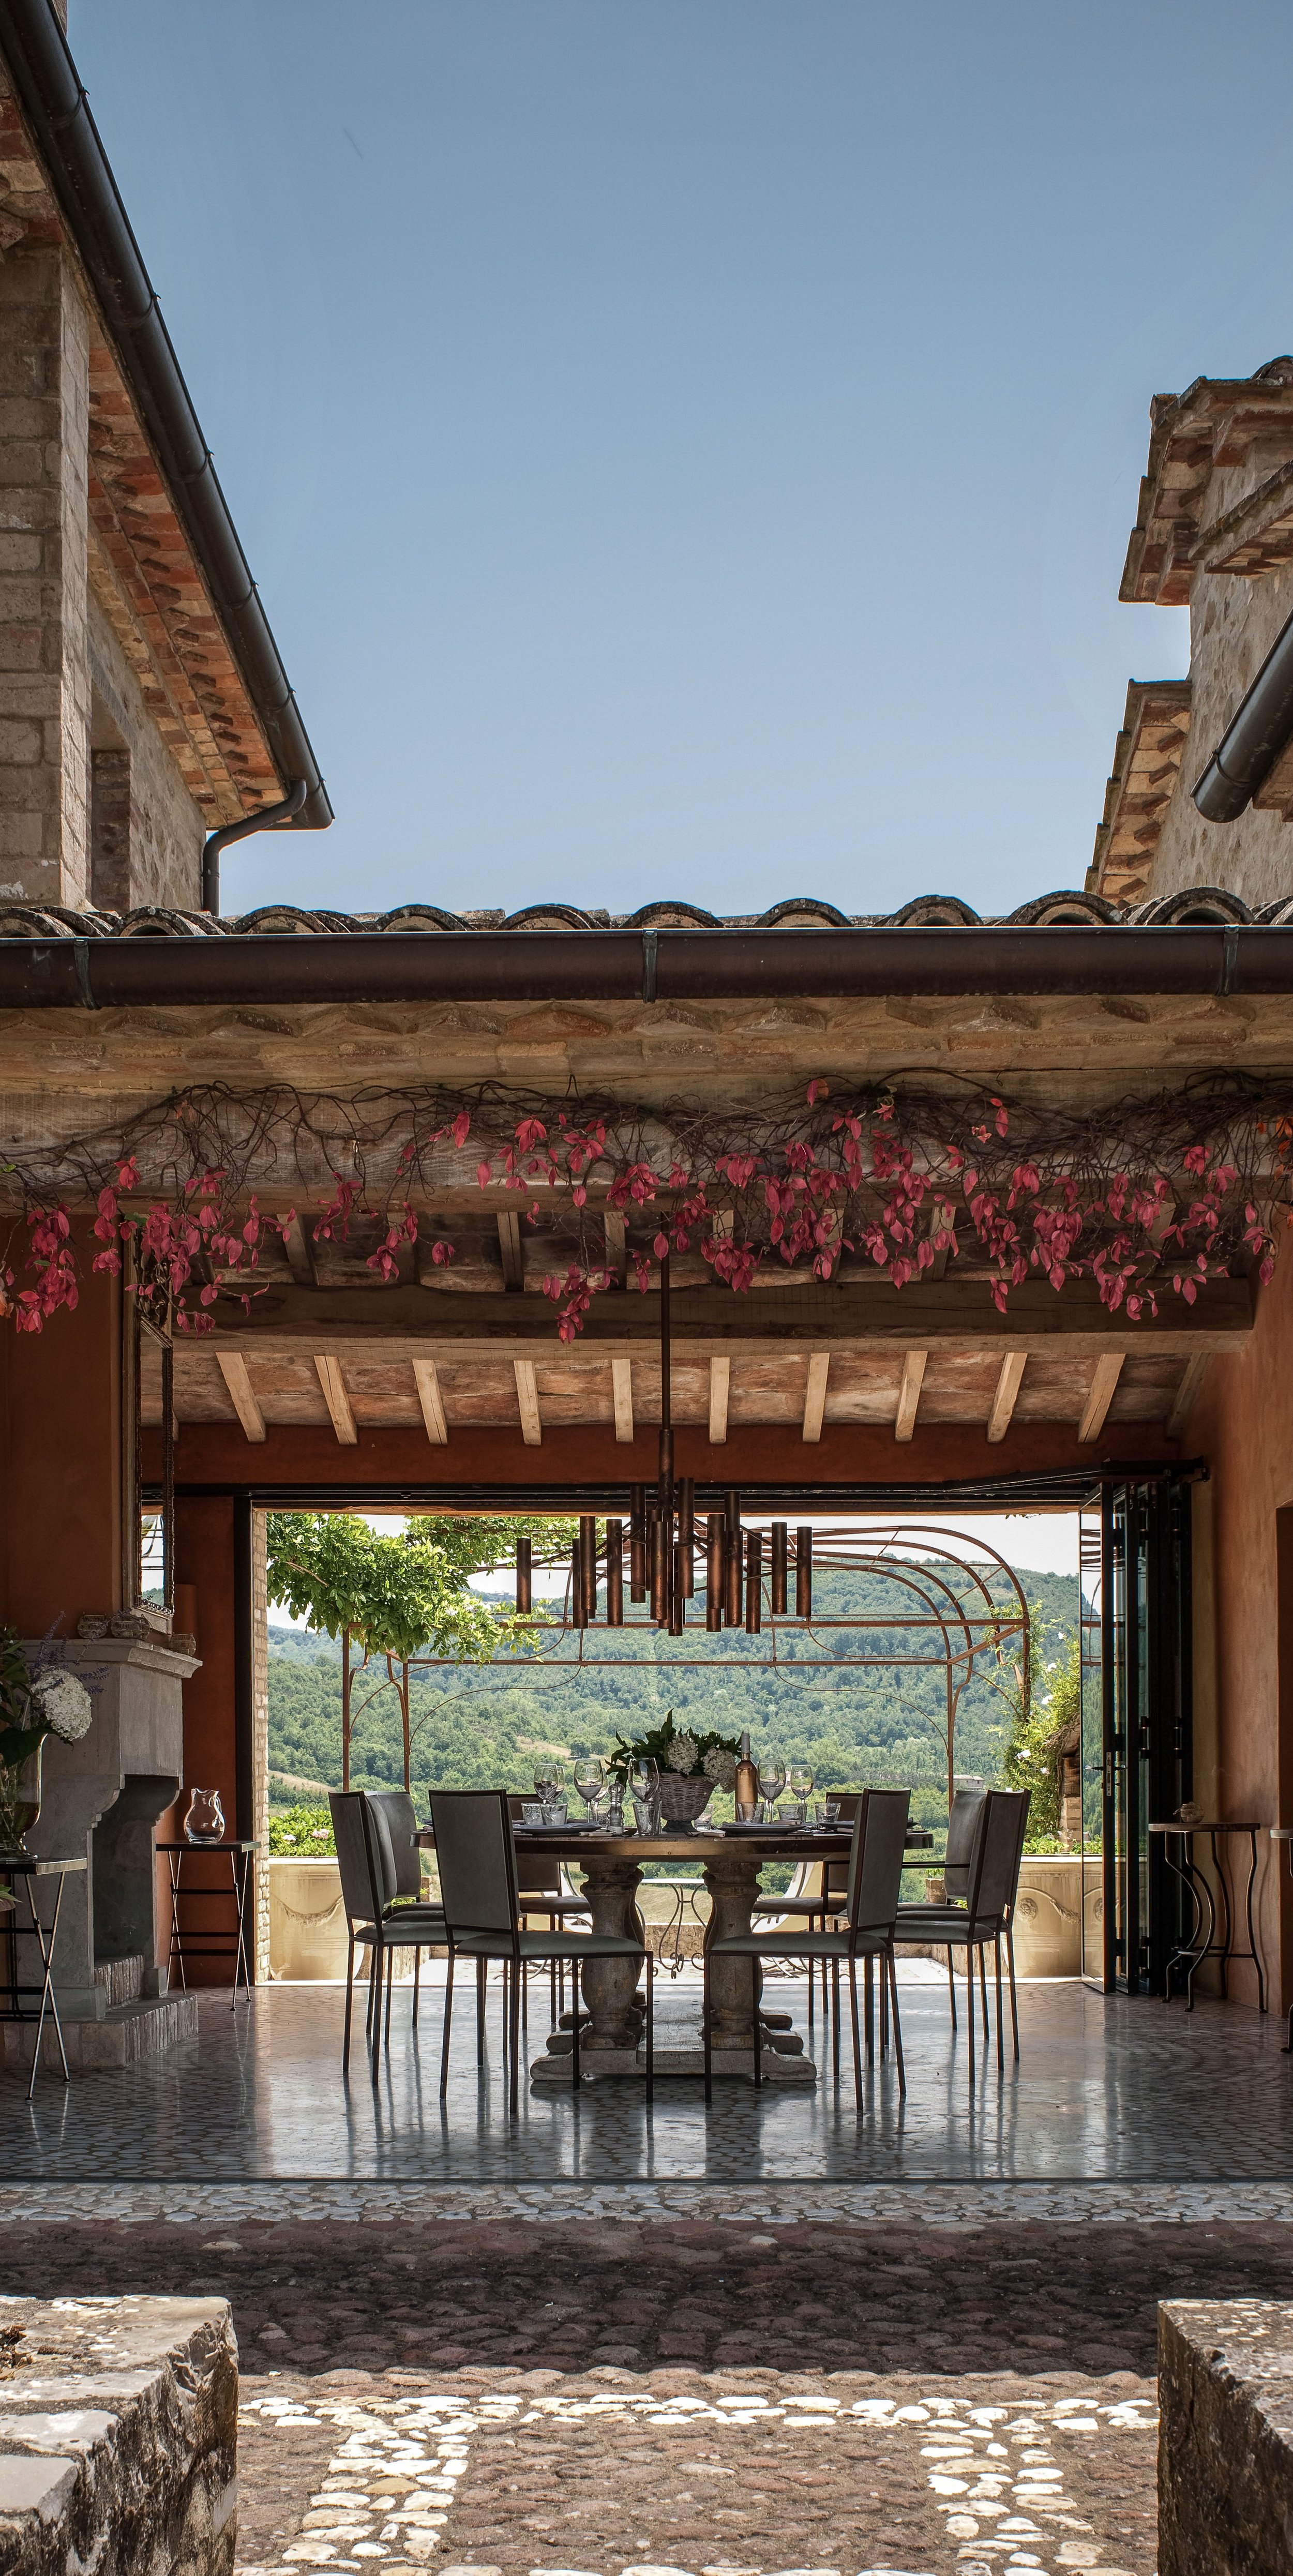 Francis York Exclusive Luxury Villa Rental in Umbria, Italy 2.jpg